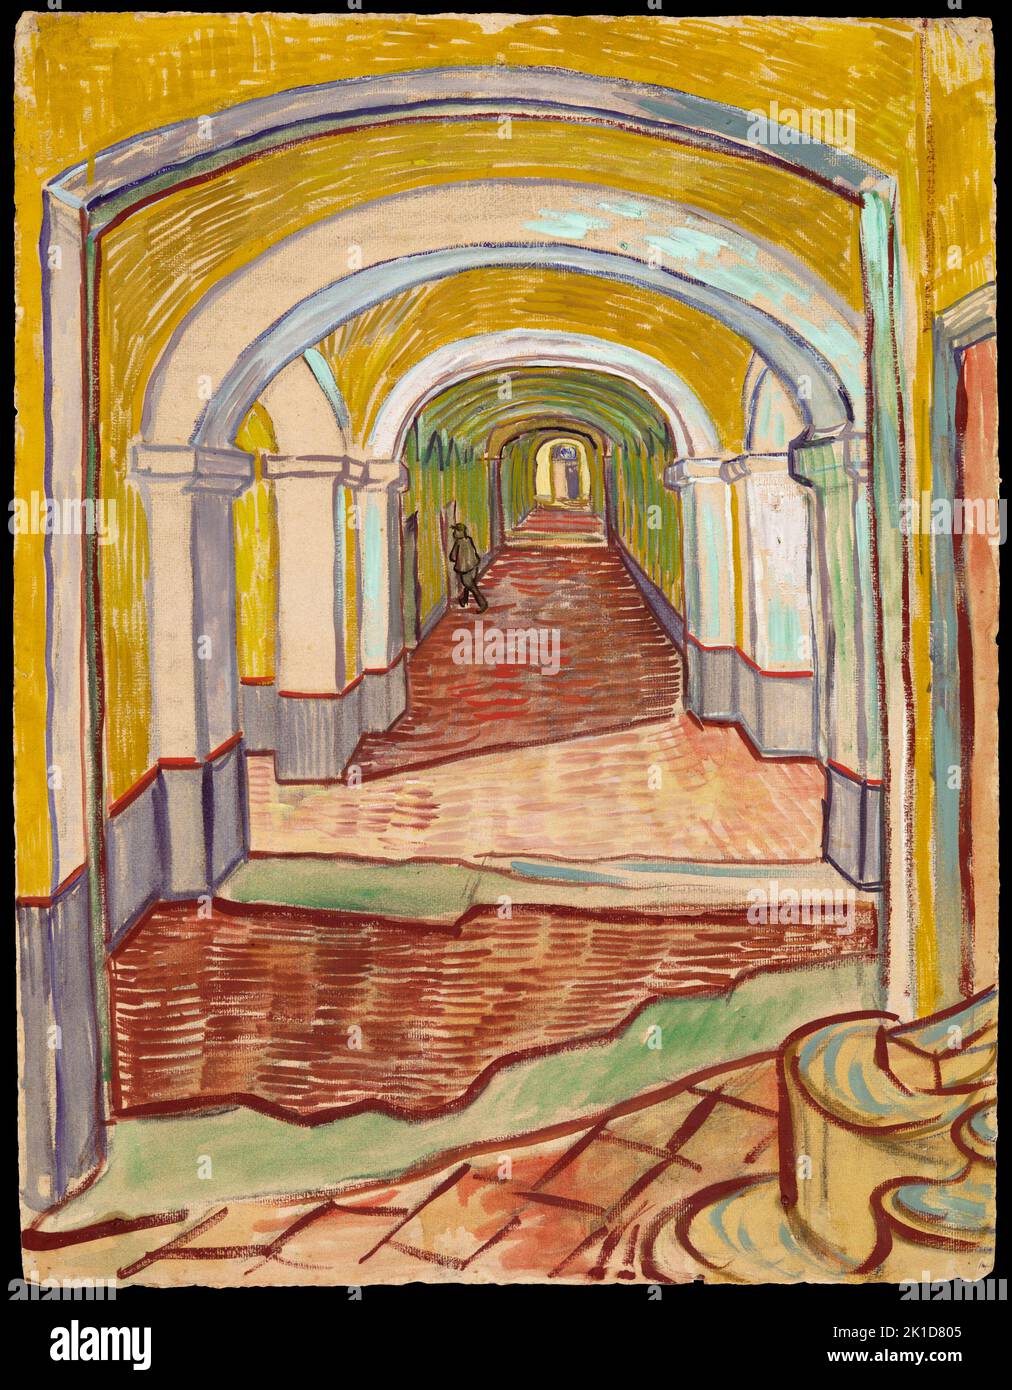 Corridor in the Asylum. Vincent van Gogh. September 1889. Stock Photo